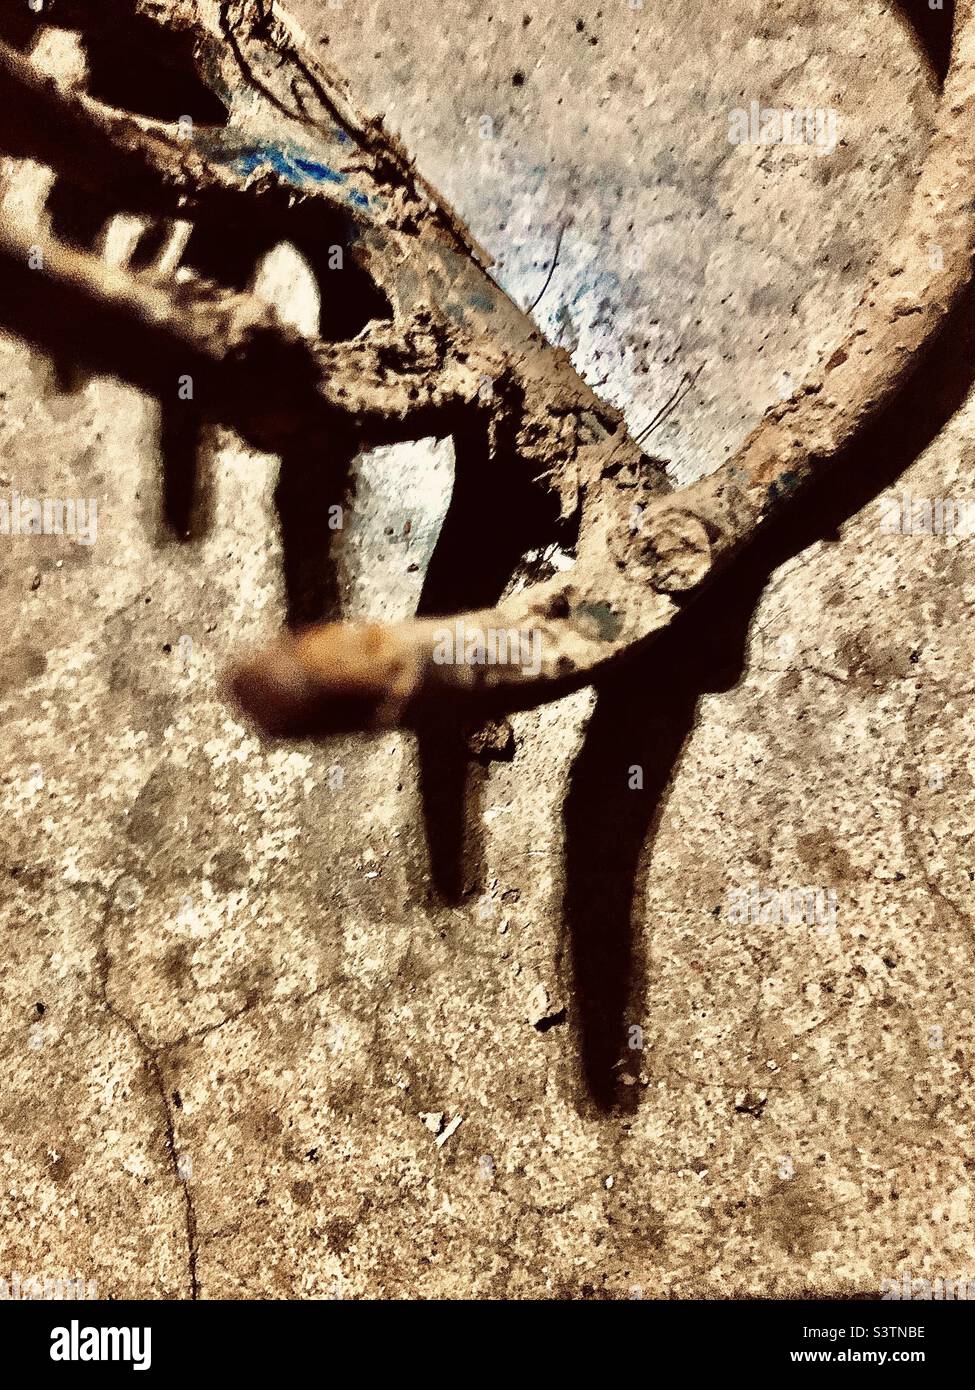 Closeup detail of muddy rake Stock Photo